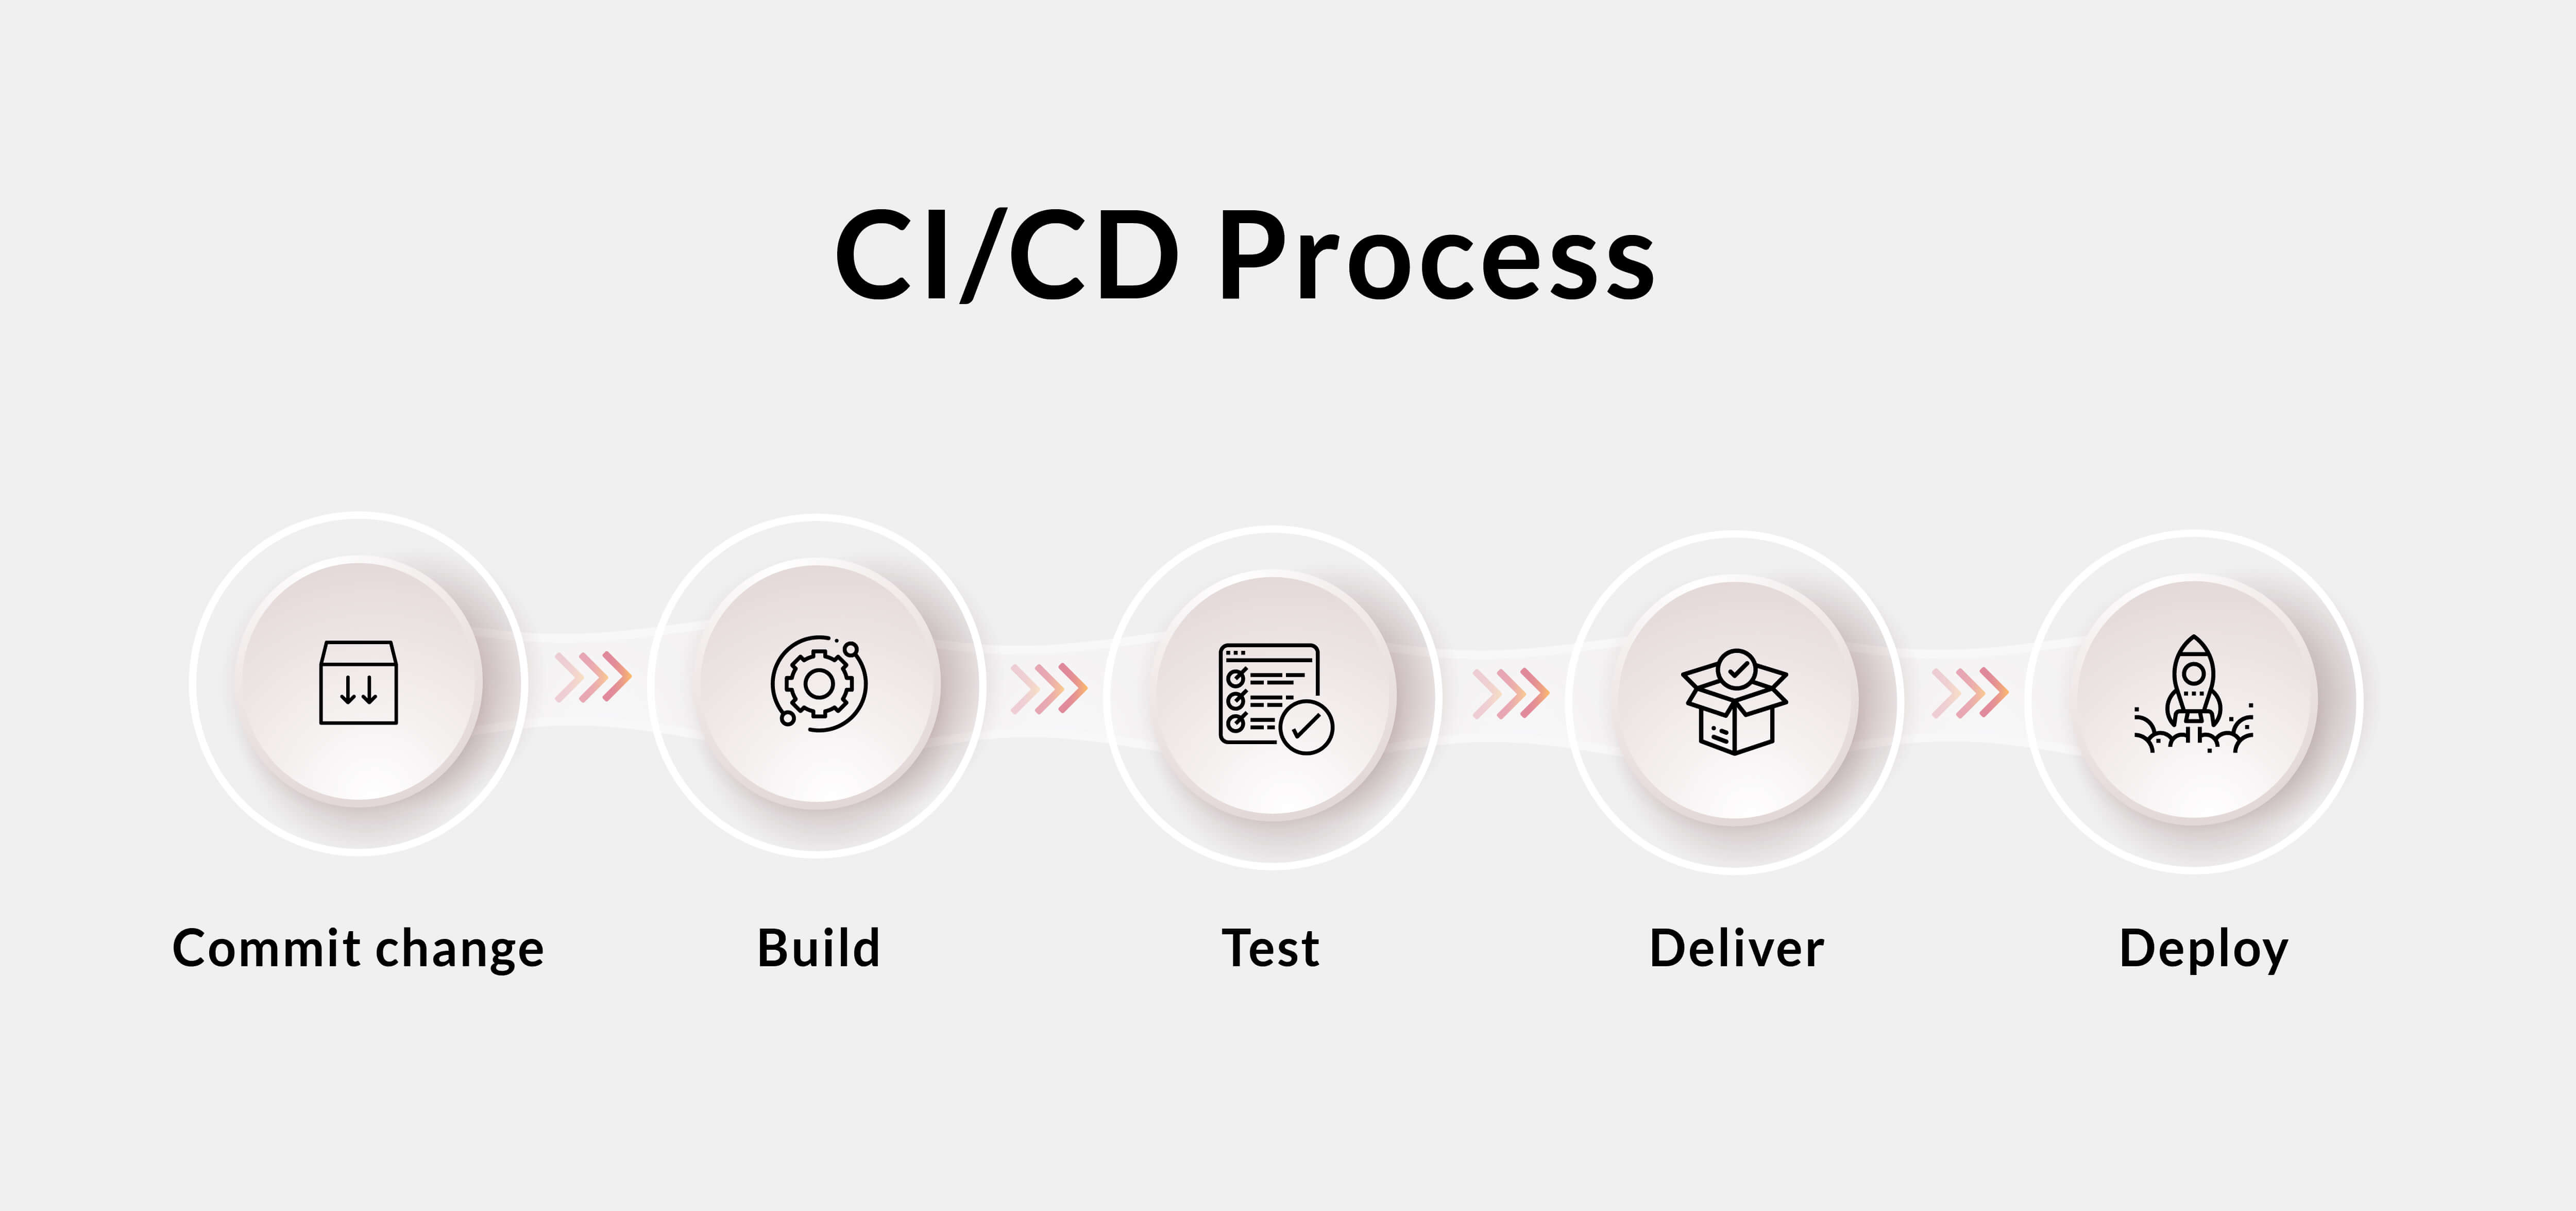 Ci/CD процесс. Ci CD process. Ci CD CDL CDP разница.